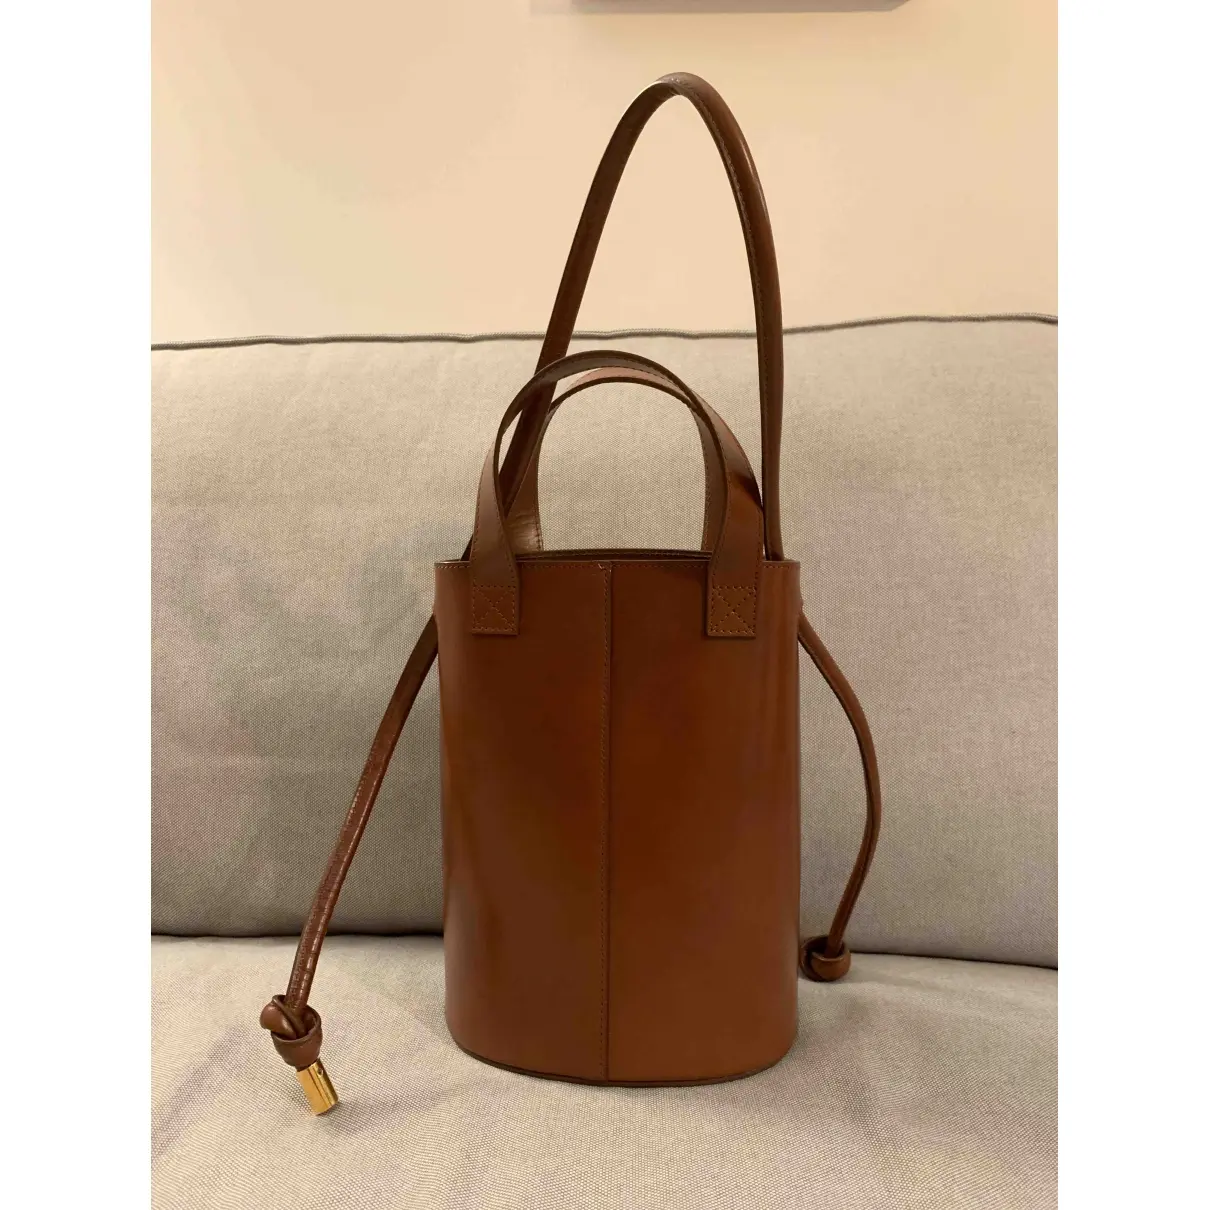 Trademark Leather handbag for sale